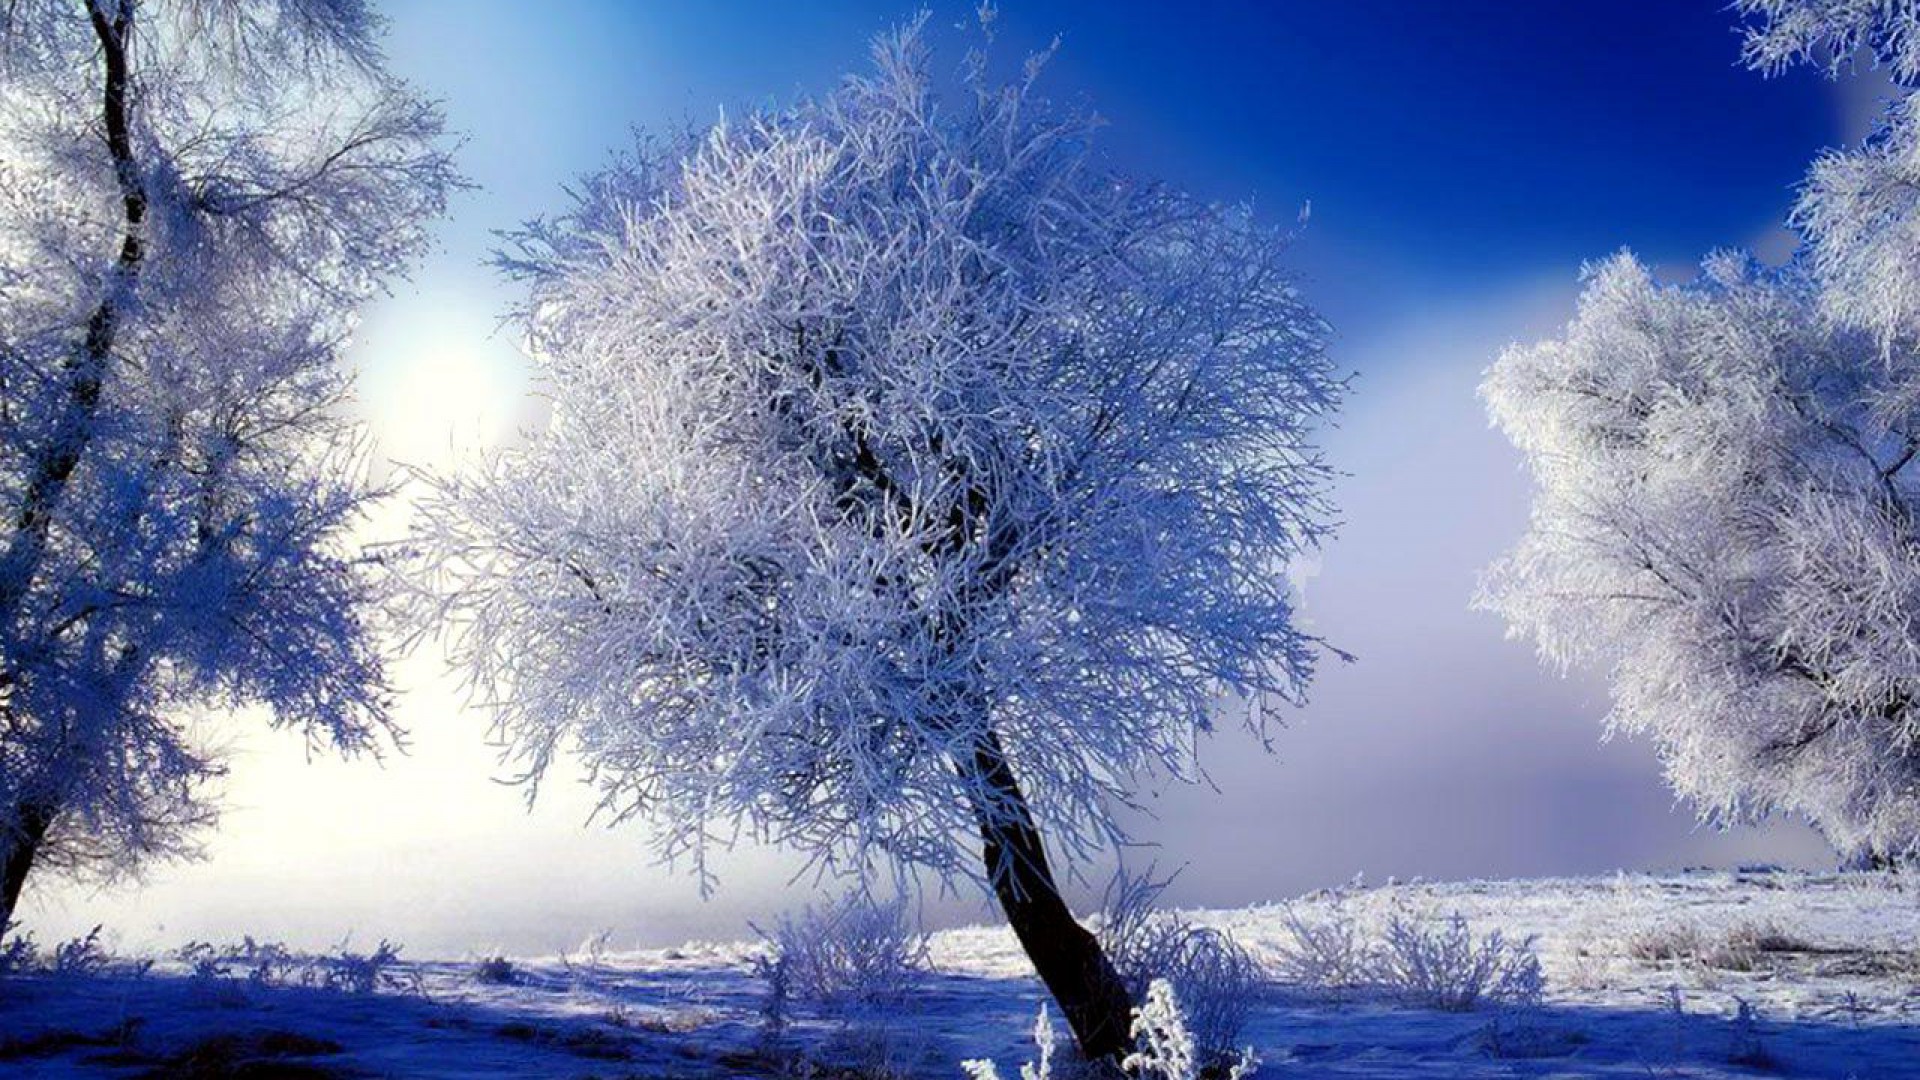 wallpaper scene,sky,natural landscape,winter,nature,tree